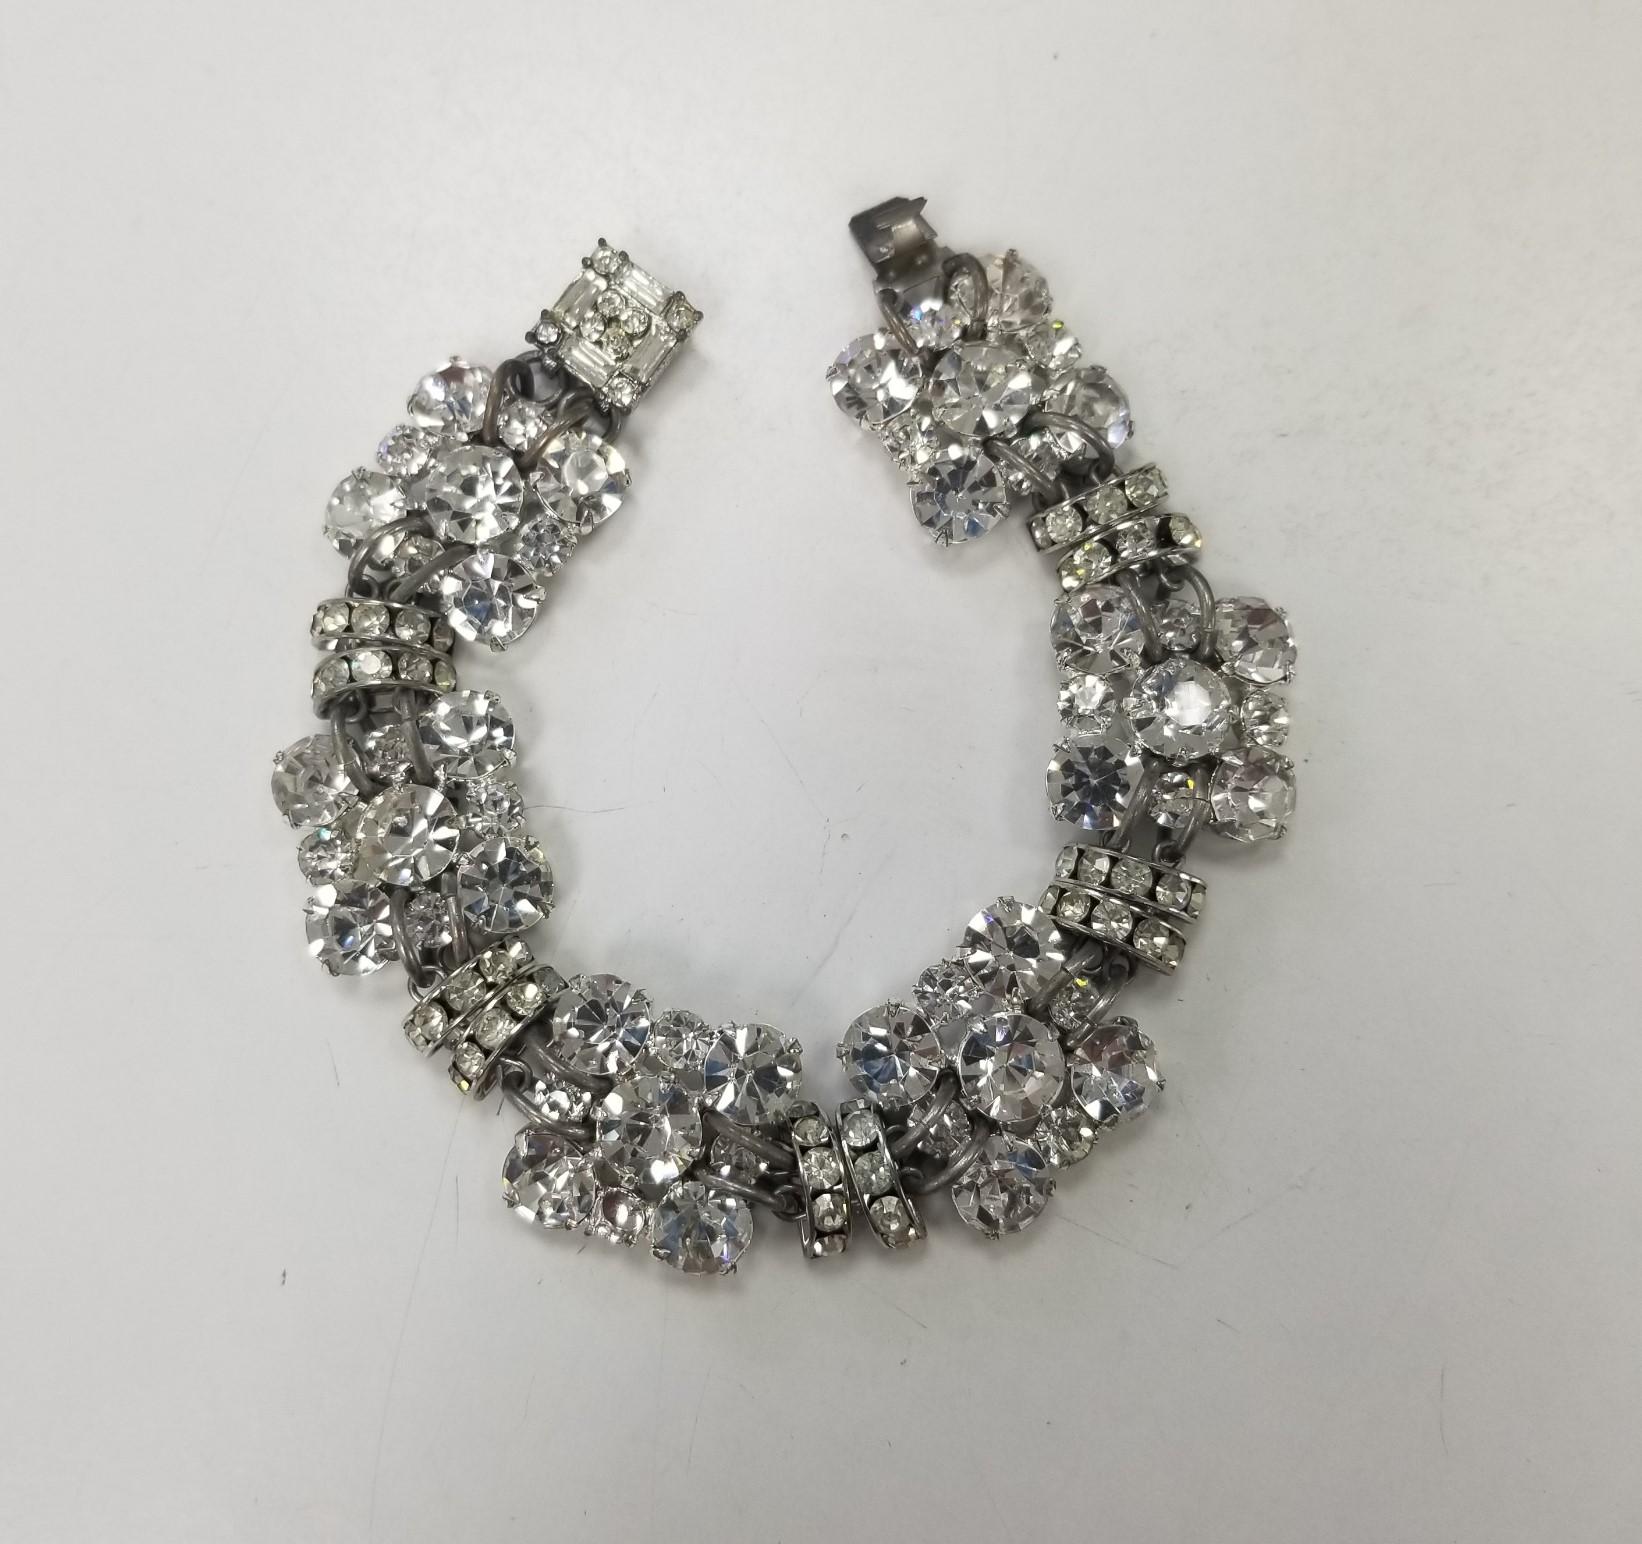 Women's or Men's Vintage Round-Cut Crystal Bracelet with Hidden Clasp